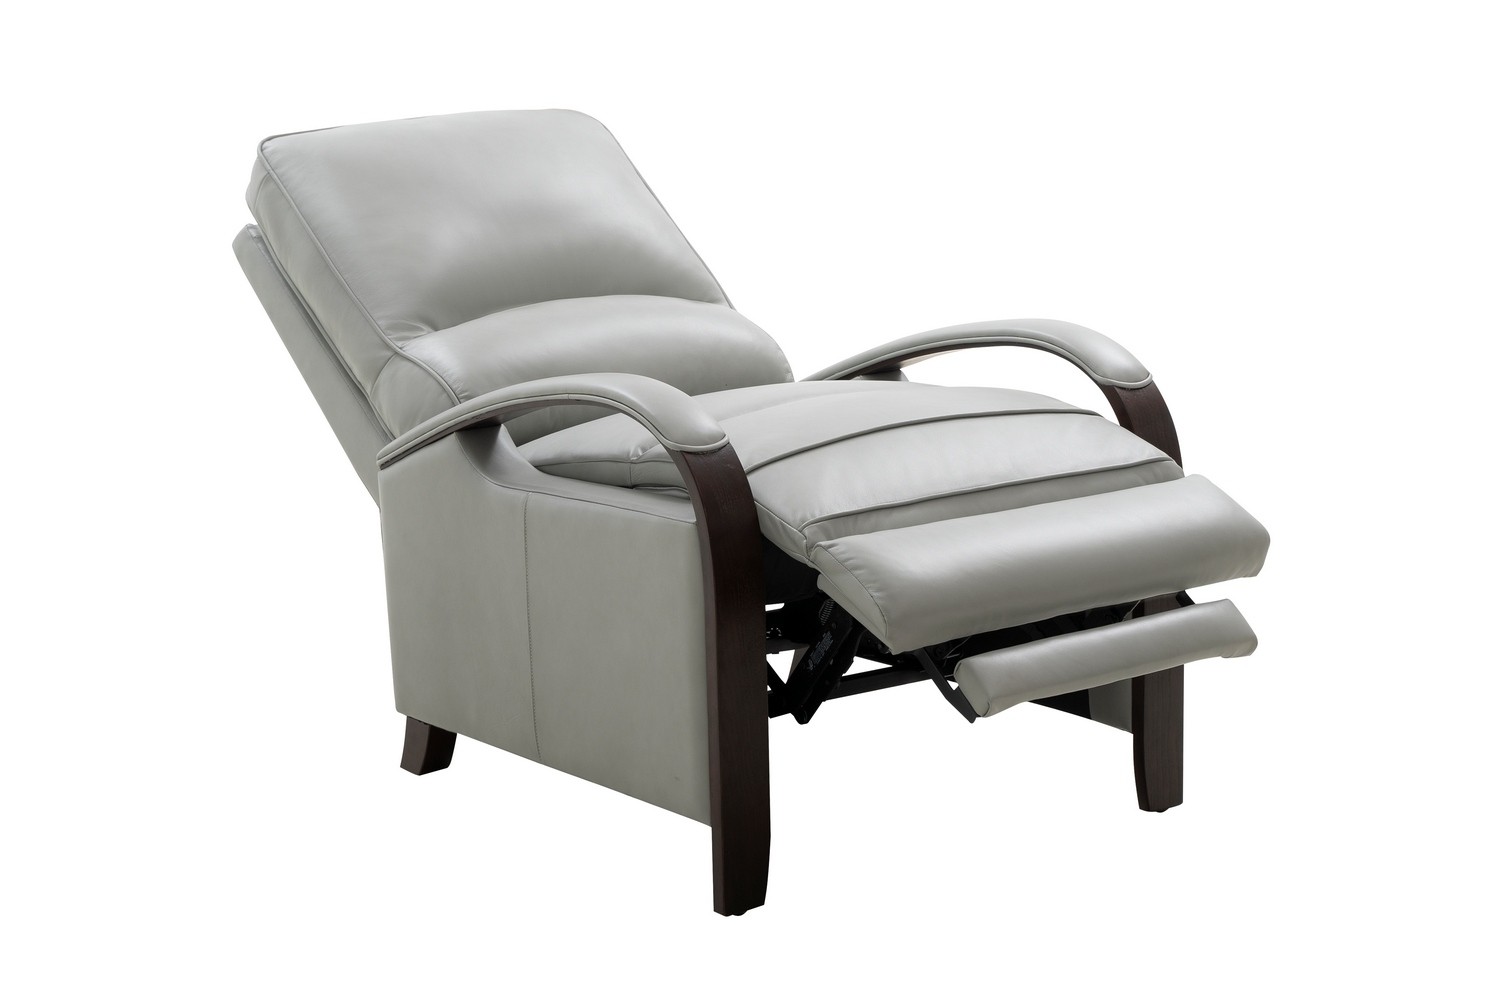 Barcalounger Bridgemore Recliner Chair - Corbett Chromium/All Leather